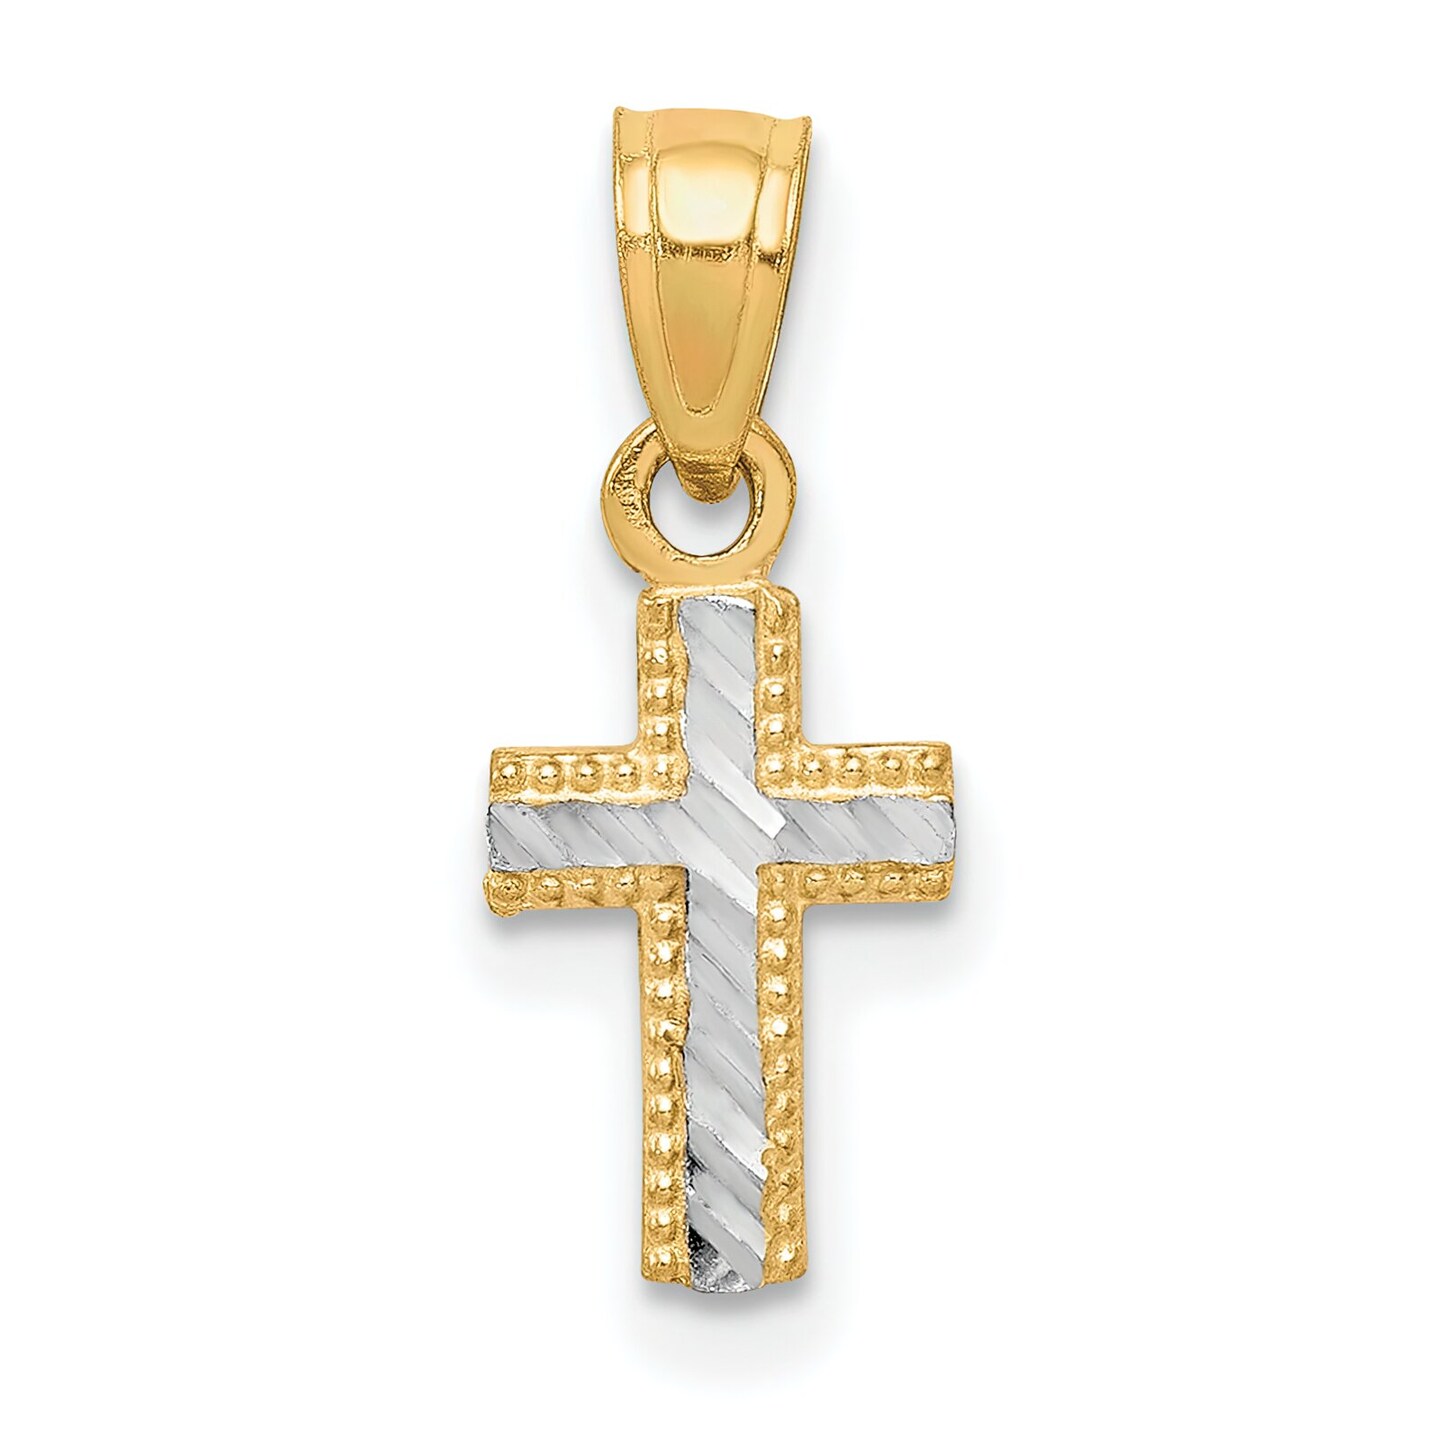 10K Gold & Rhodium Plated Tiny Diamond Cut Cross Pendant Charm